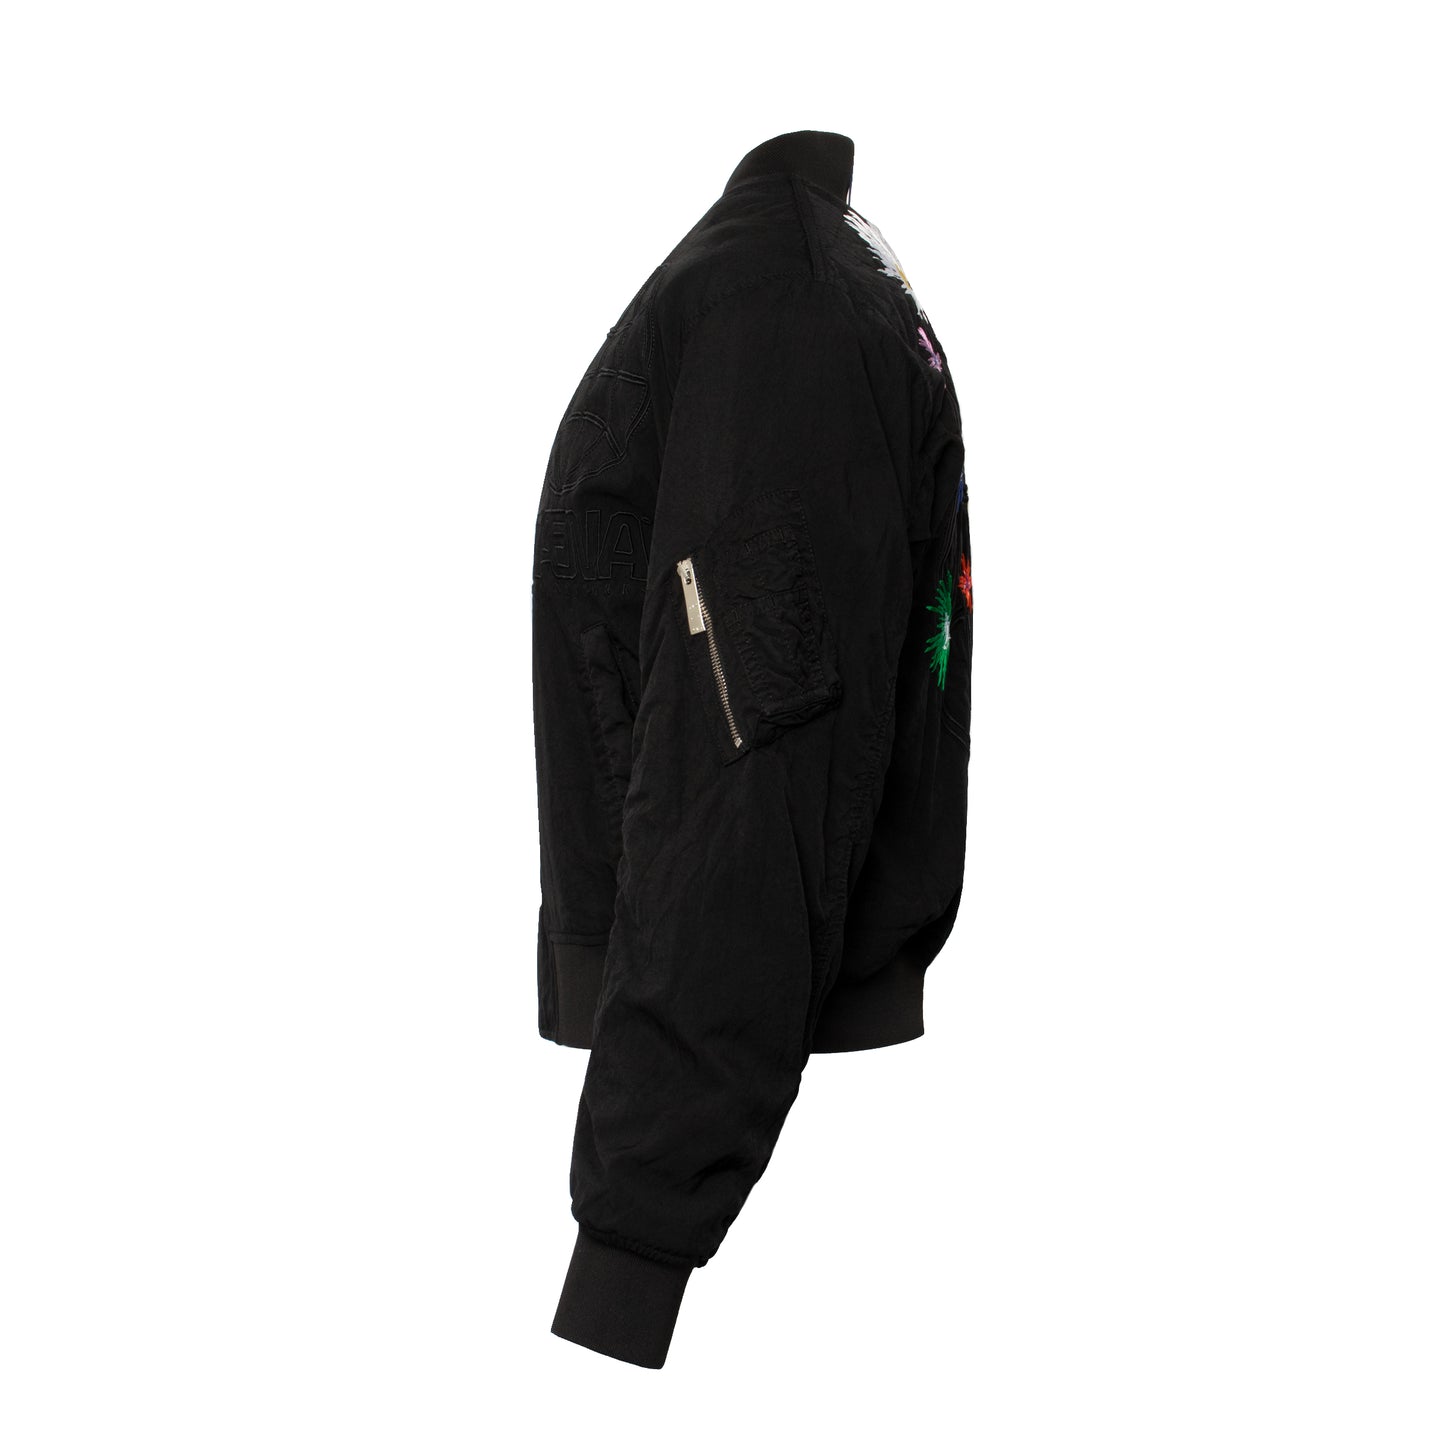 McQ Dye Nylon Jacket in Black